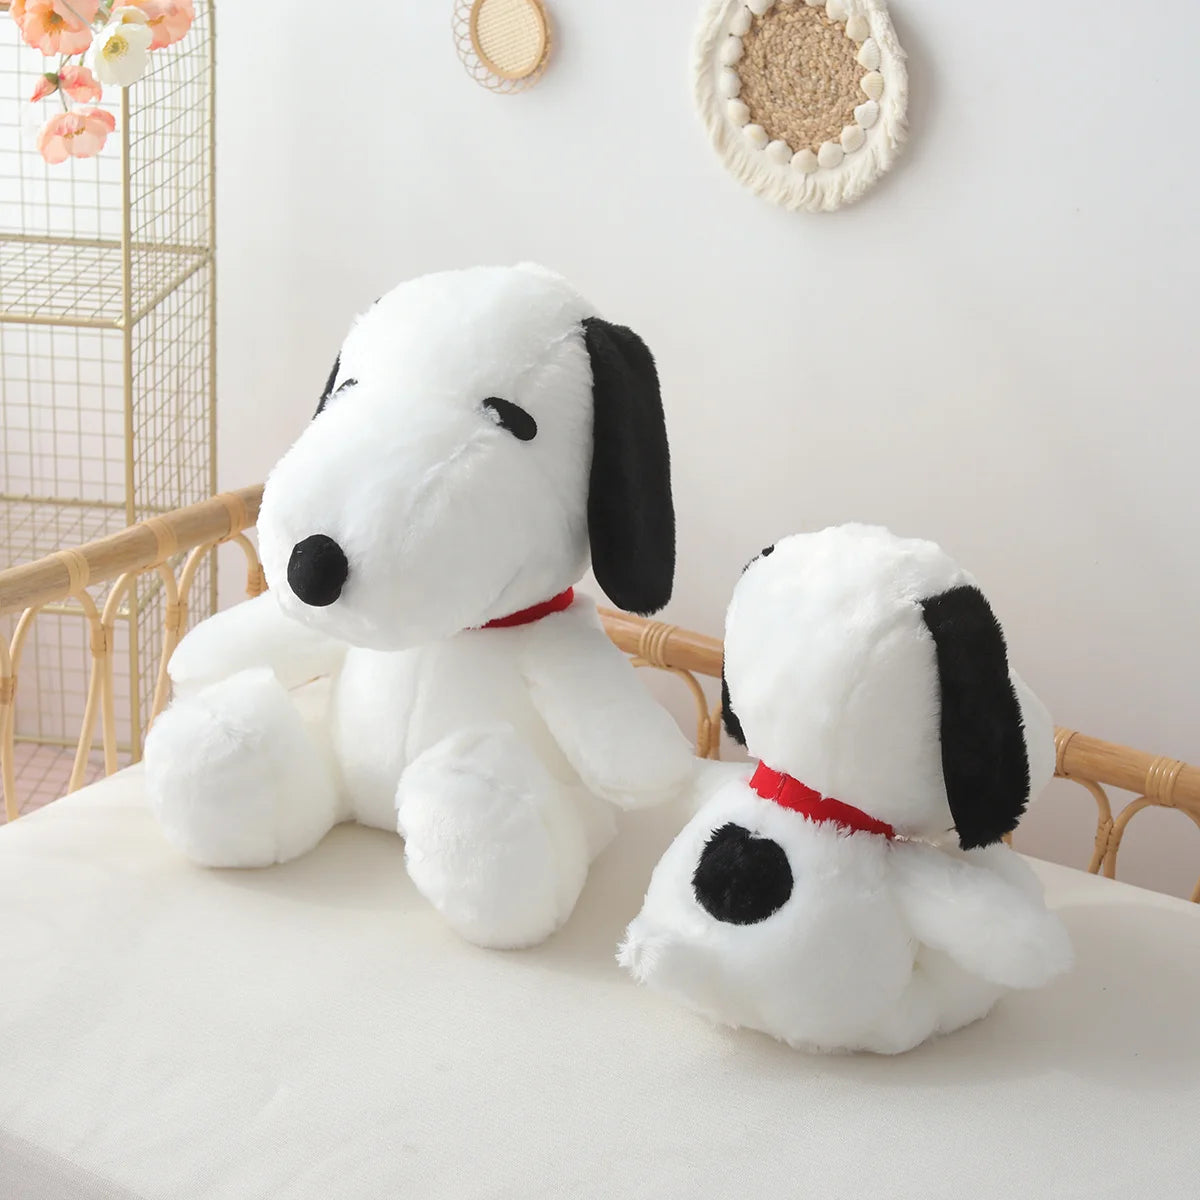 Snoopy Dog Stuffed Animal 